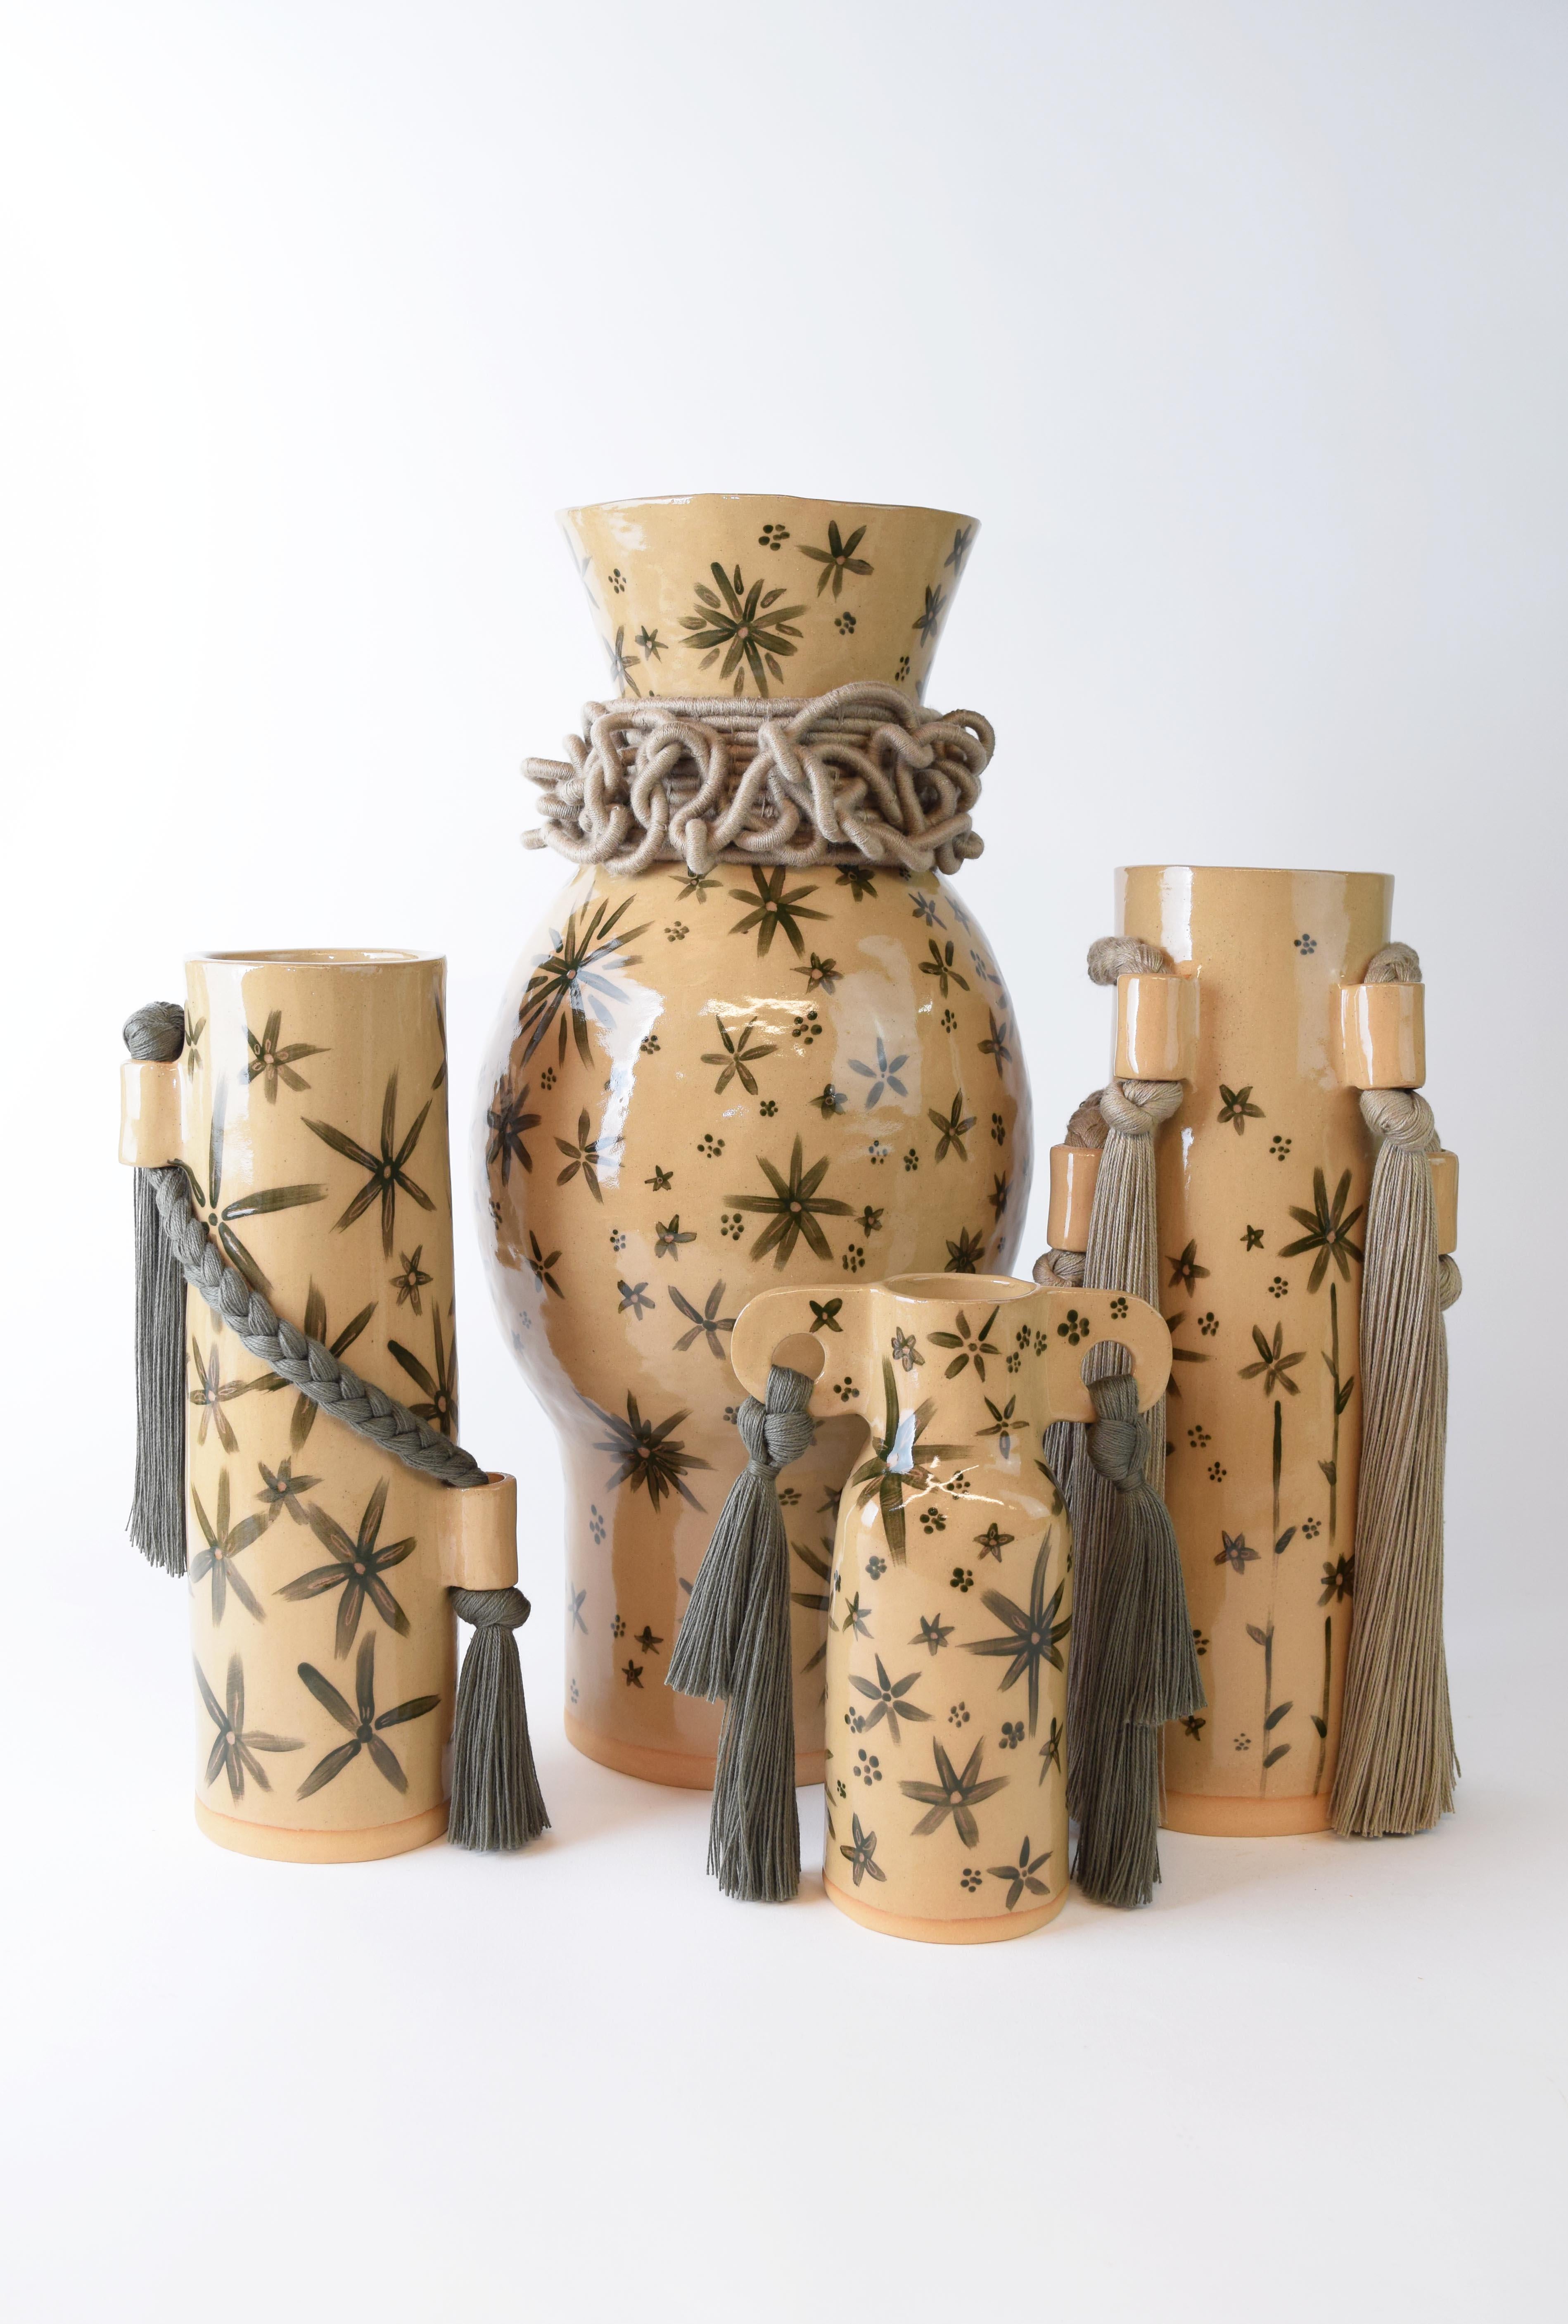 OOAK Handmade Ceramic Vase #735 - Olive Green Glazed Floral & Khaki Cotton Braid 1